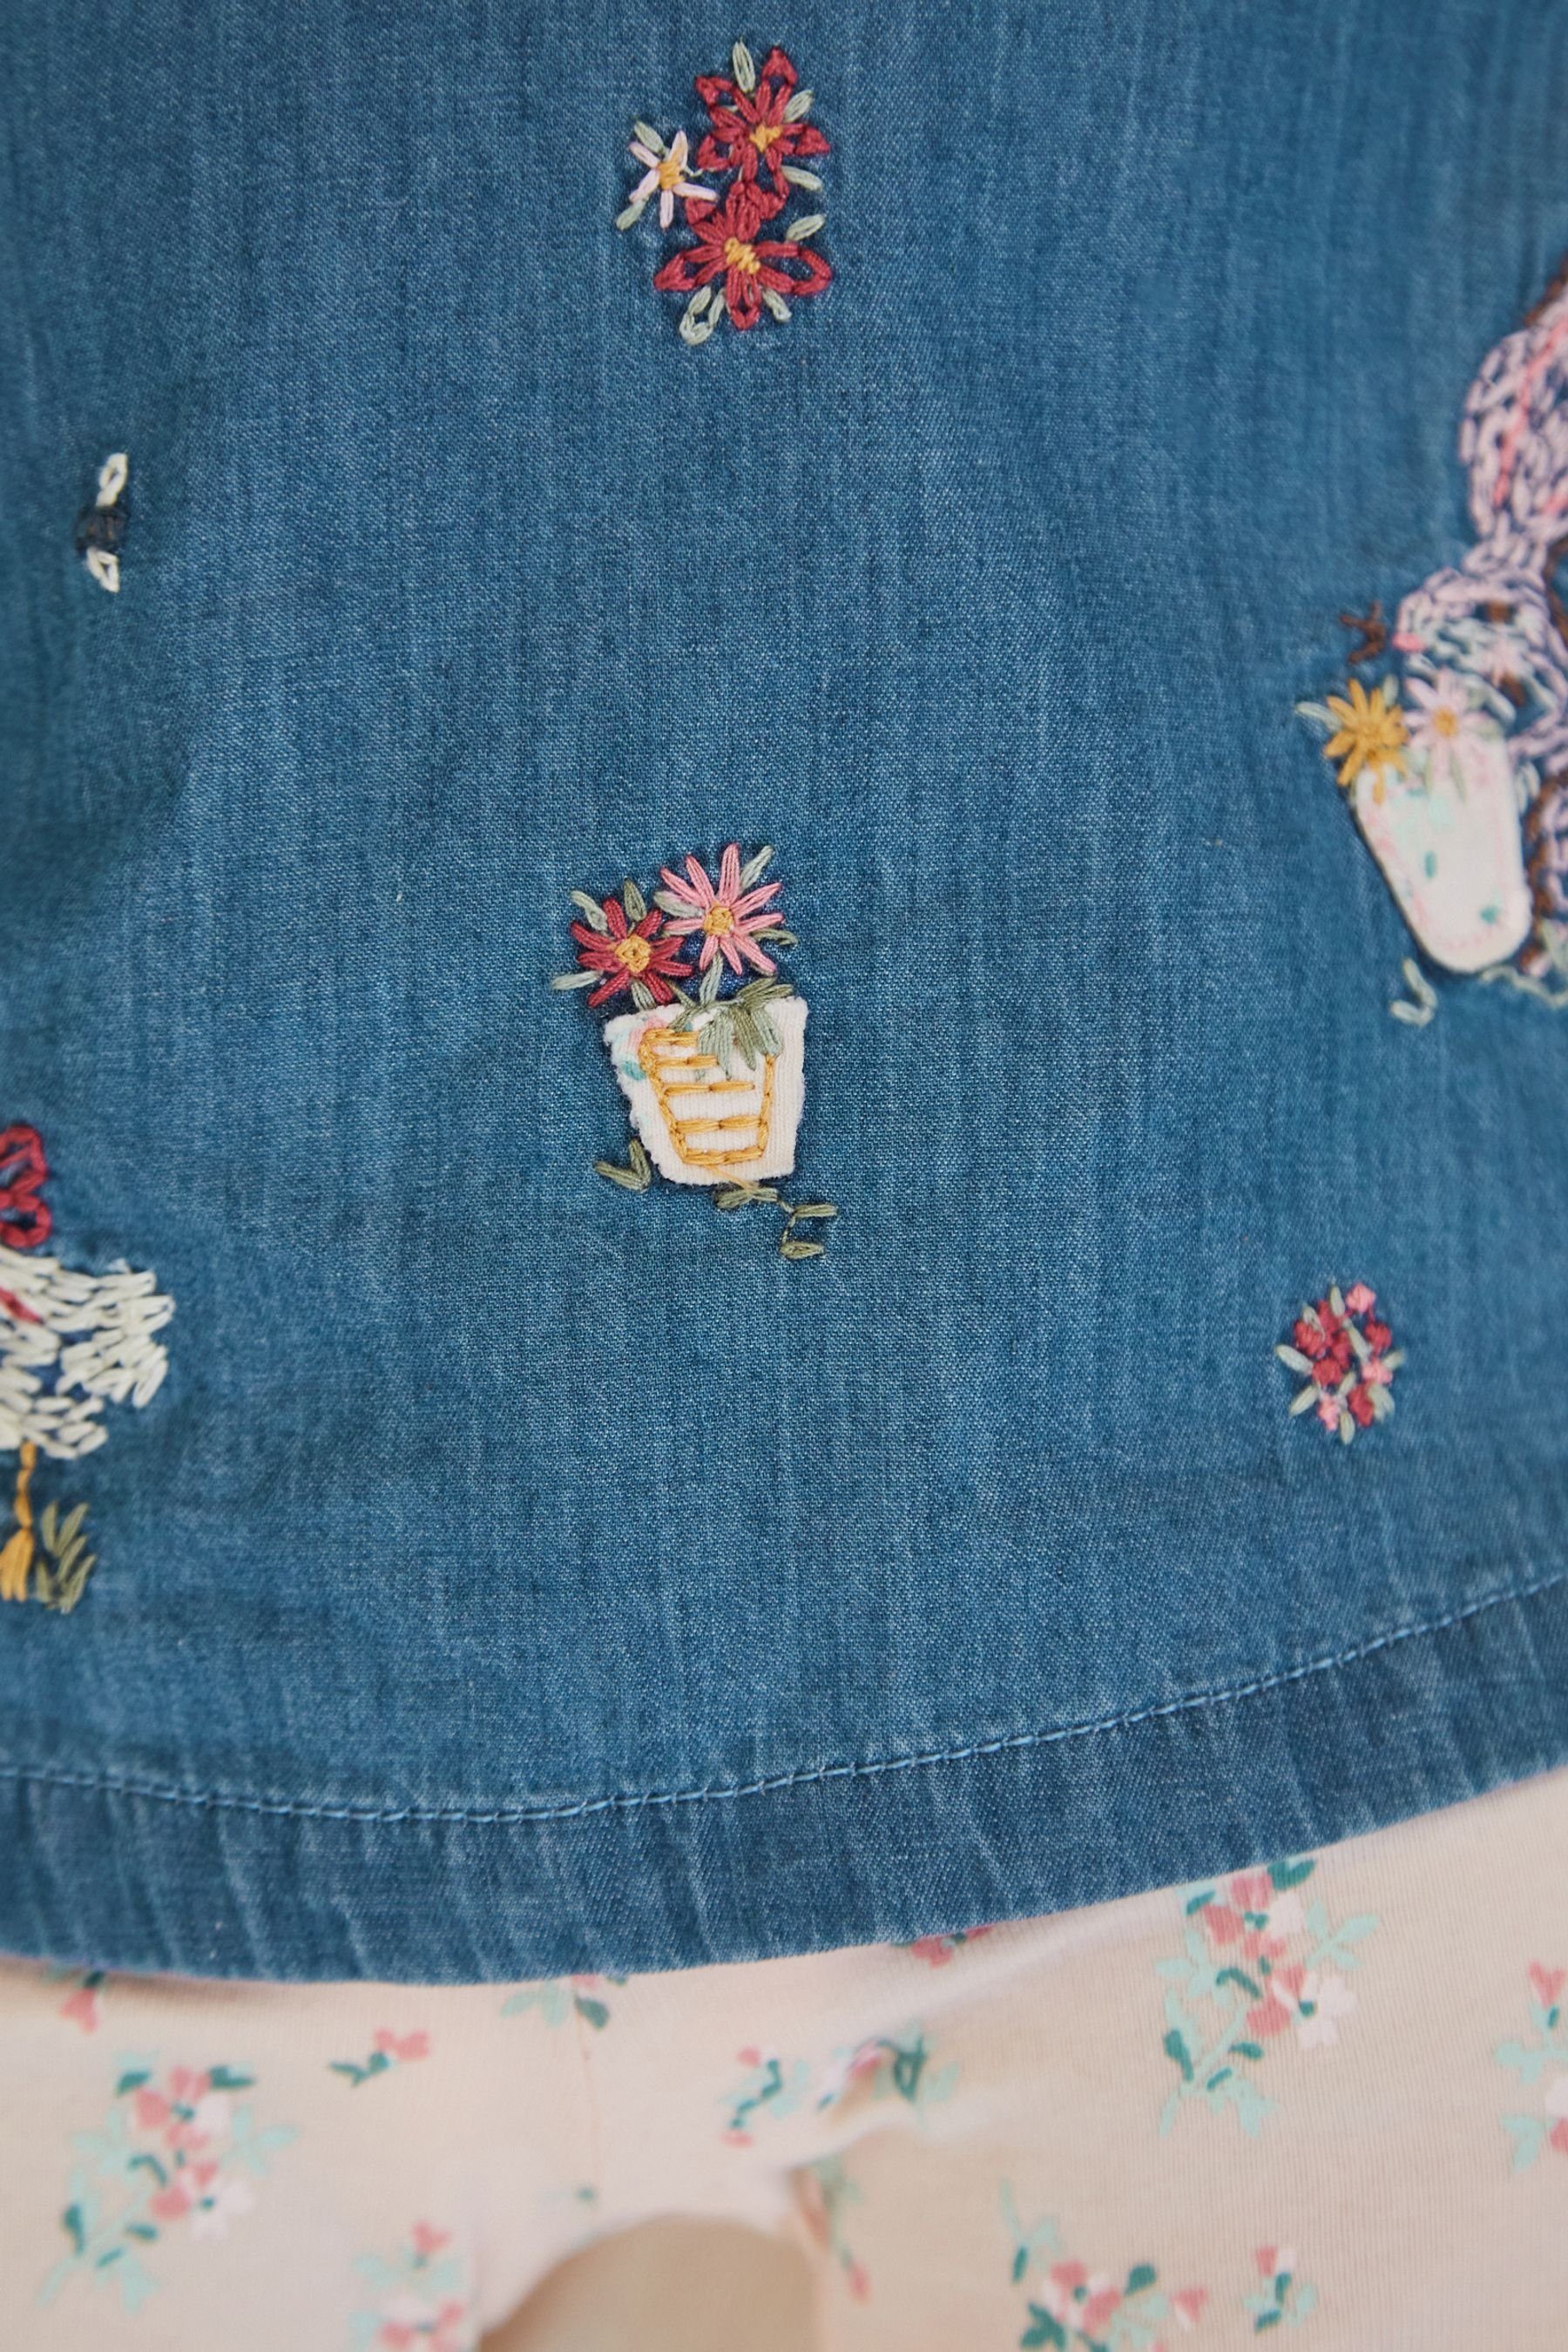 Embroidery Shirt Bunny 2-teiliges Next (2-tlg) Baby-Set Denim mit Jeans-Oberteil Leggings Blue + & Leggings